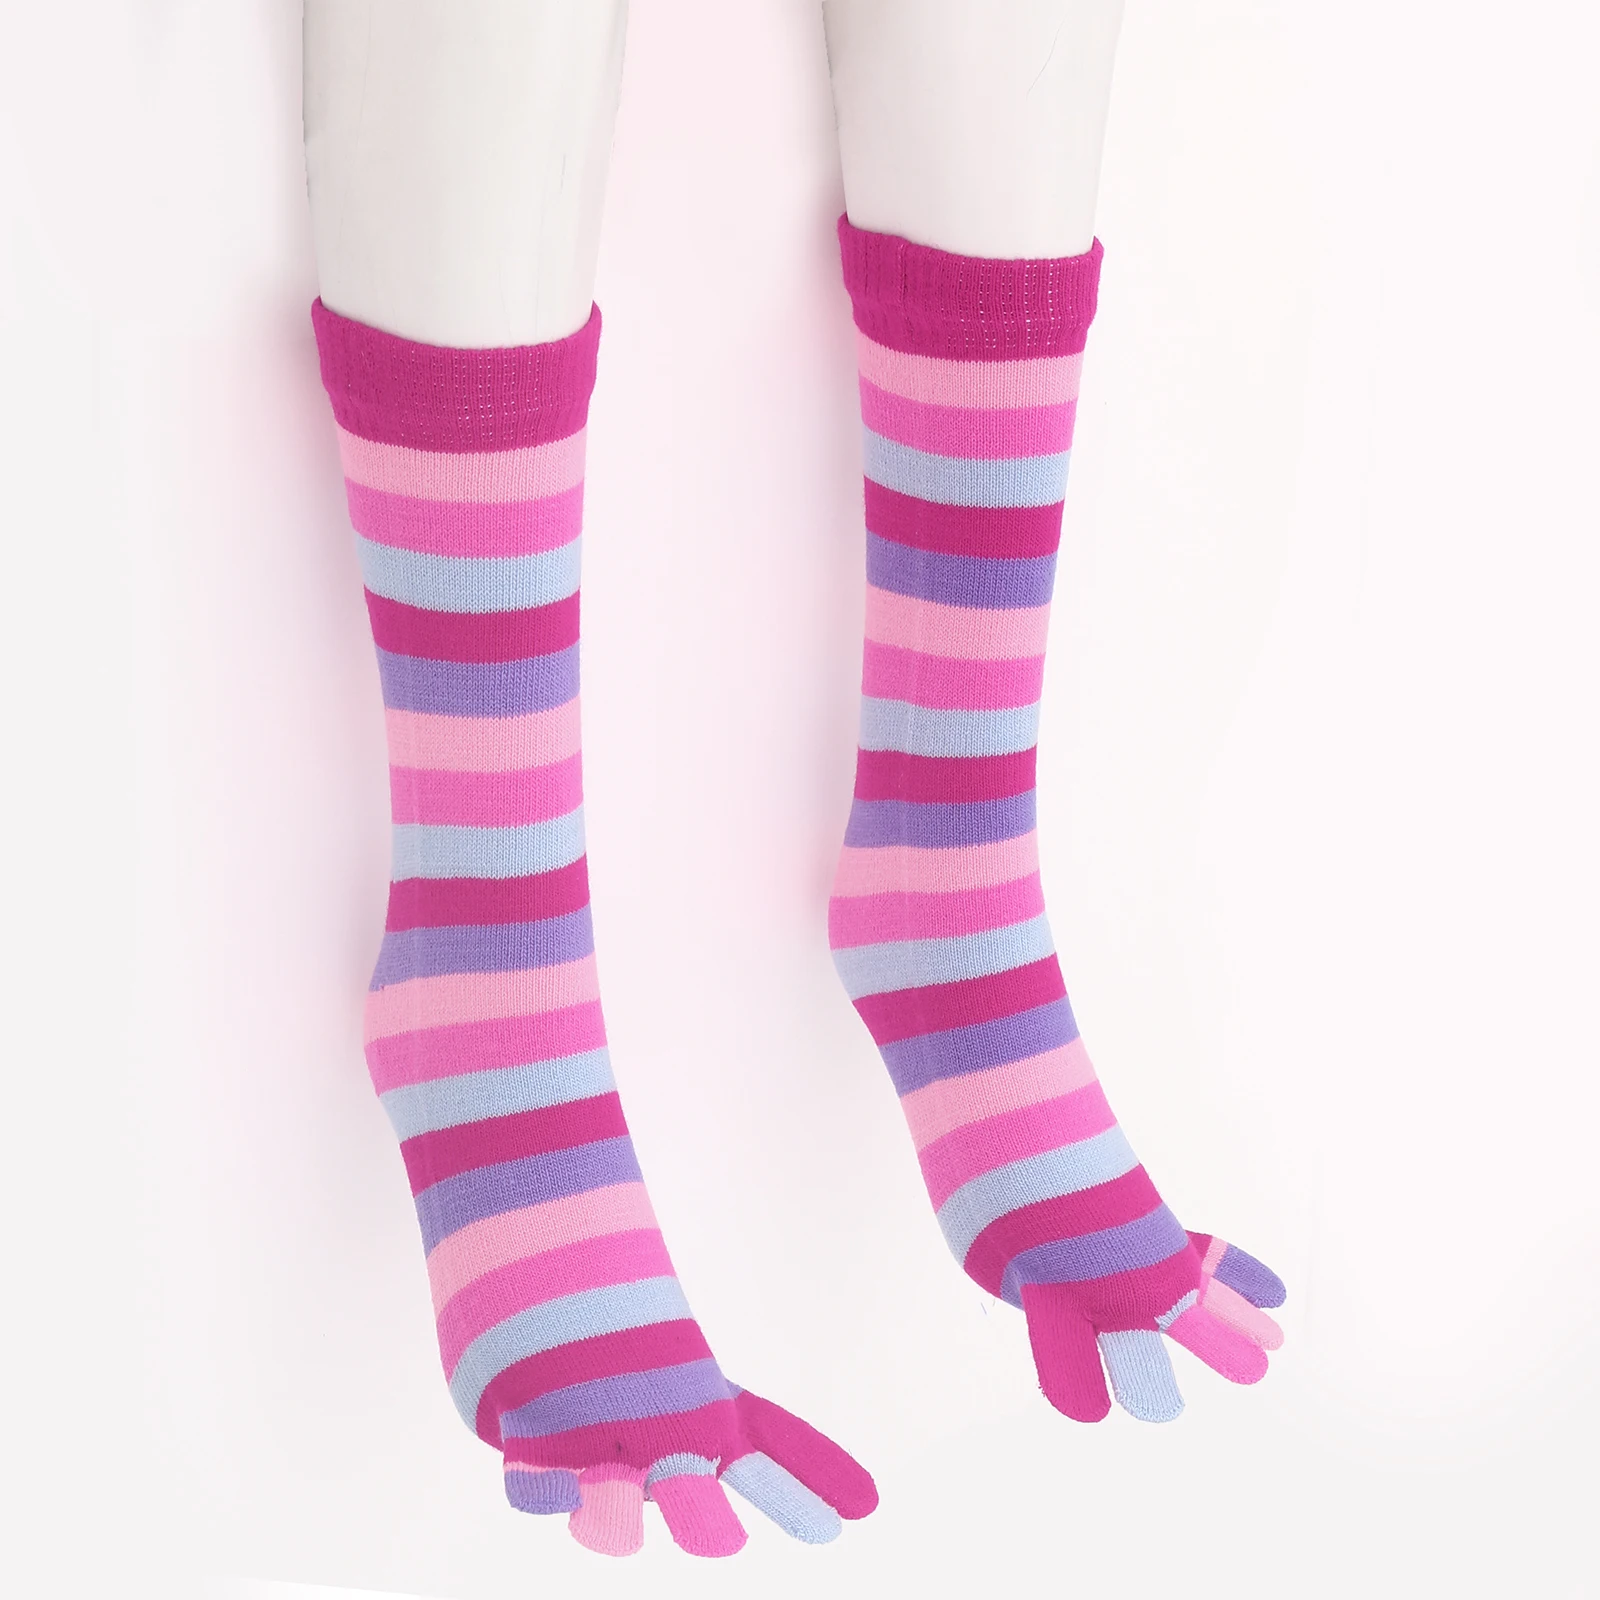 Womens Girls Rainbow 5 Toe Socks Funny Cute Colorful Striped Knee High Socks Novelty Crazy Finger Tube Costume Gift Socks 